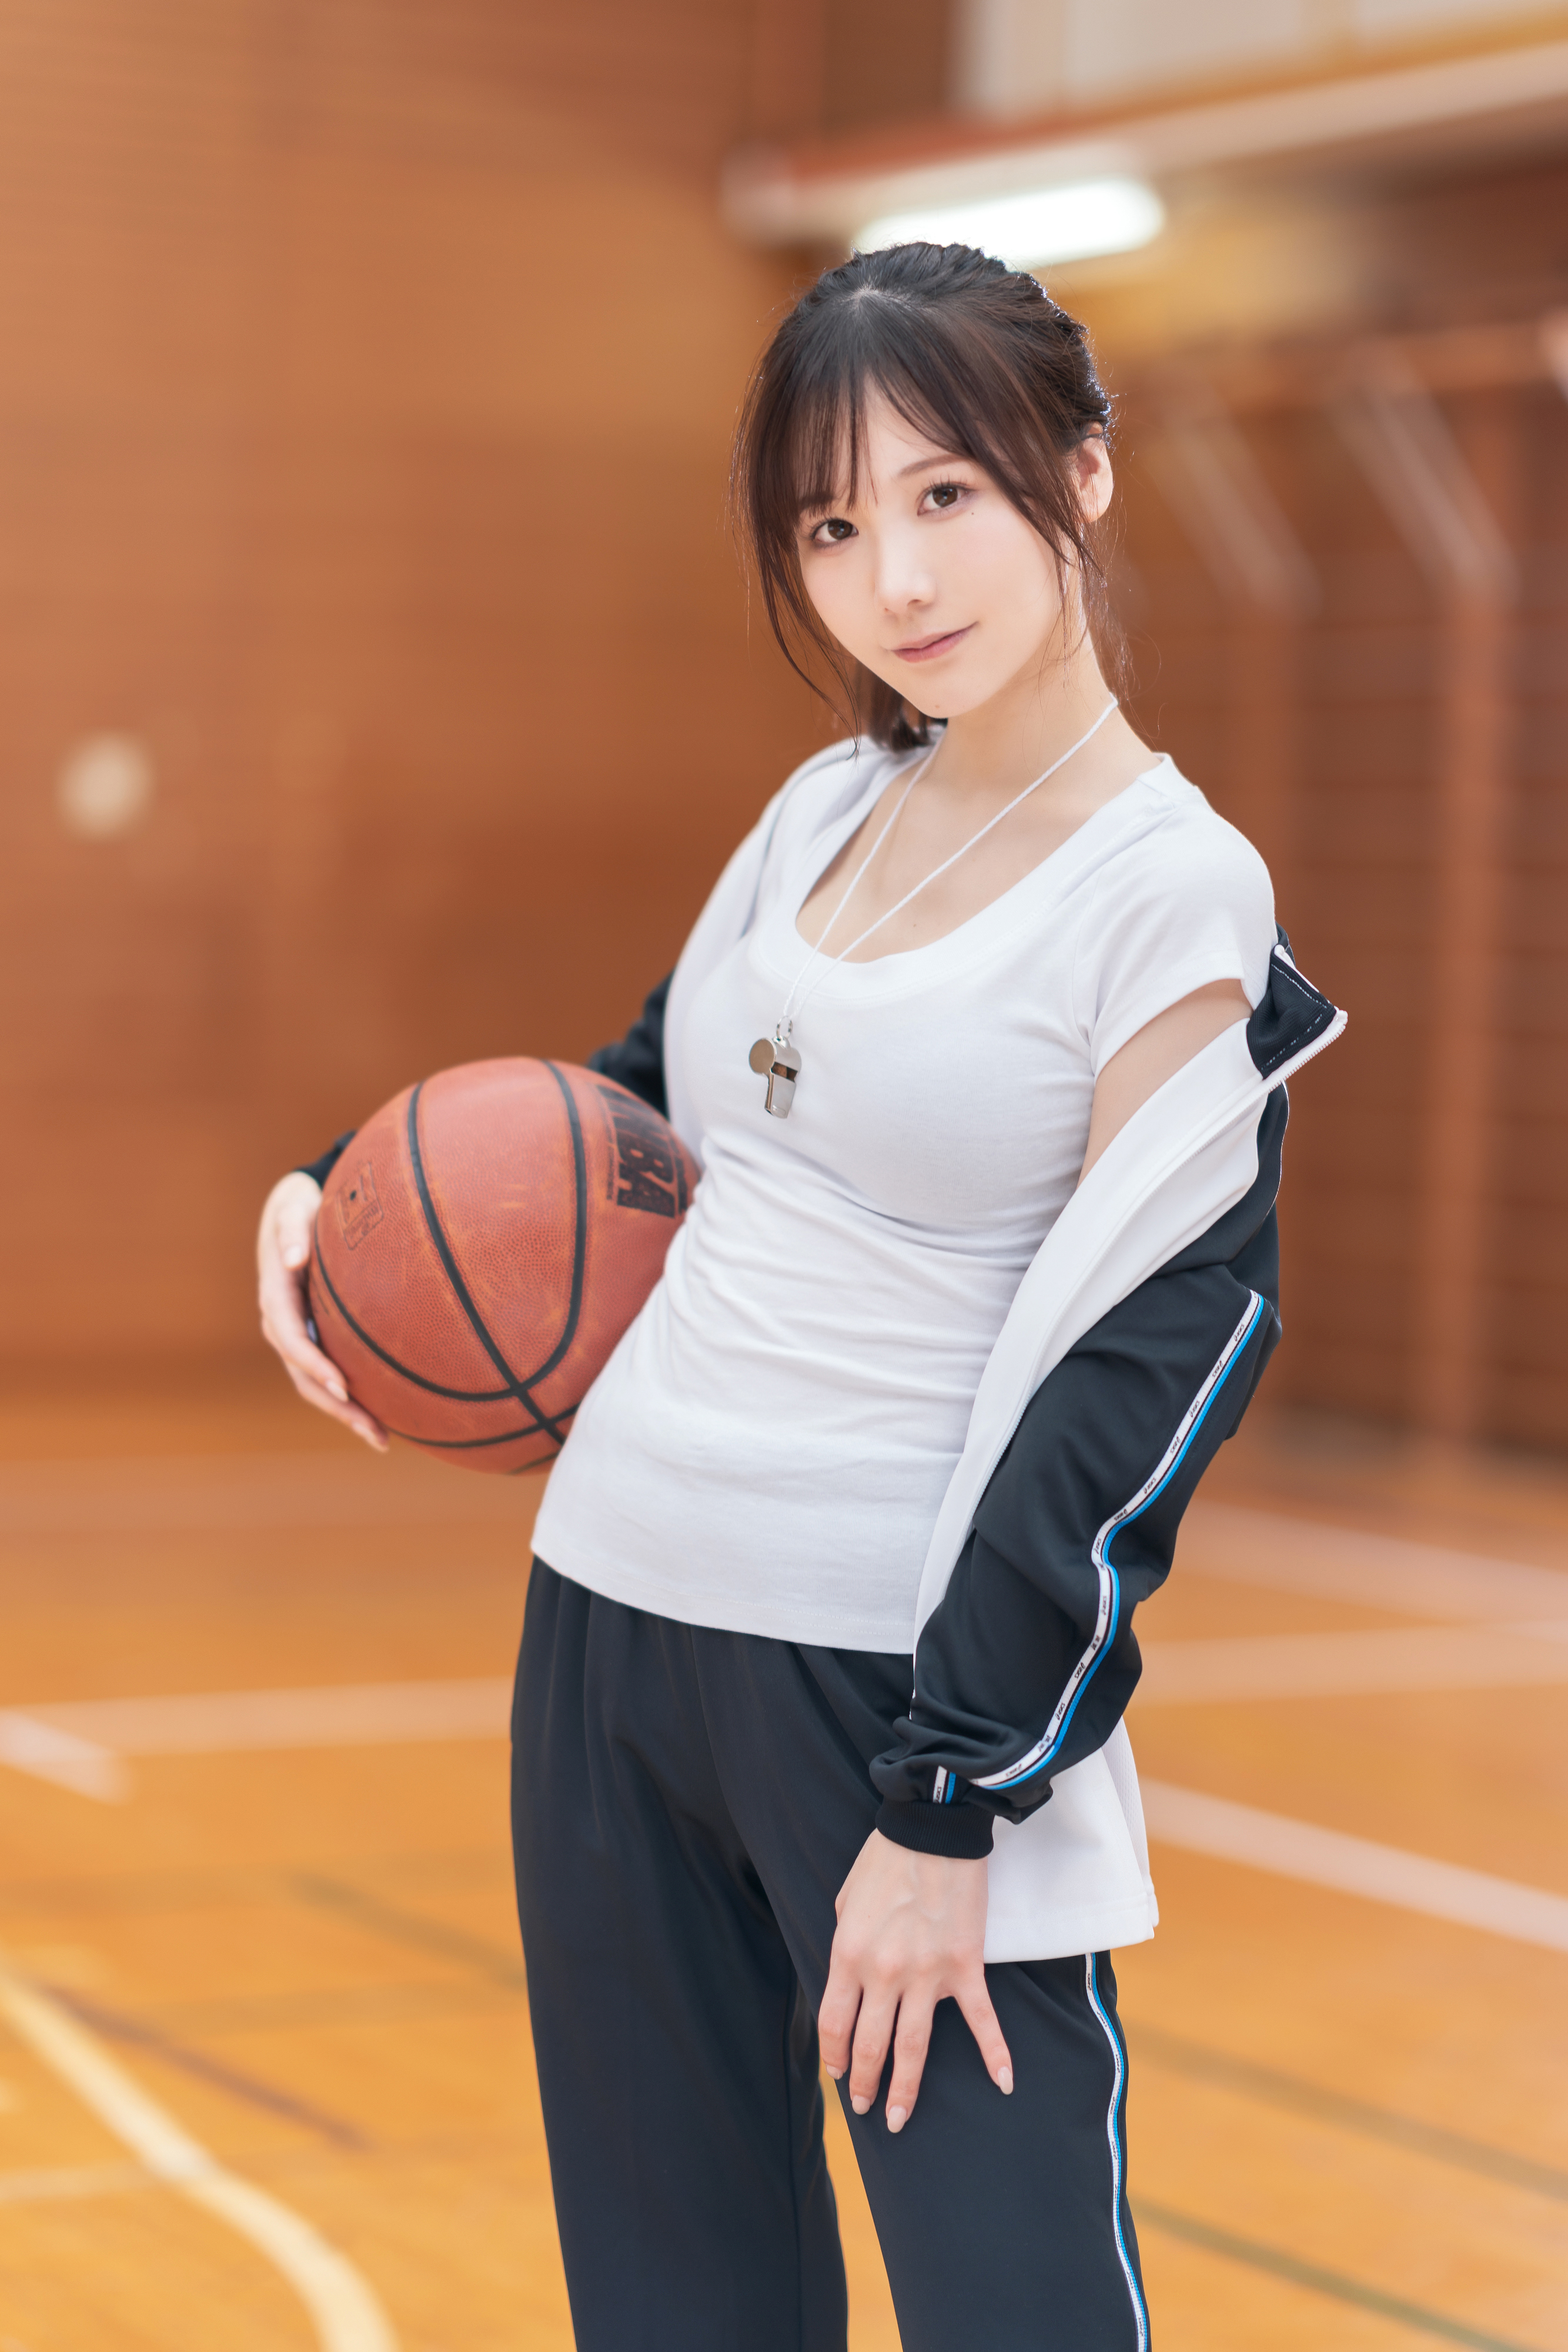 People 2667x4000 KenKen (model) Japanese women Japanese model cosplay women indoors brunette Asian women model whistle looking at viewer basketball court basketball T-shirt white tops